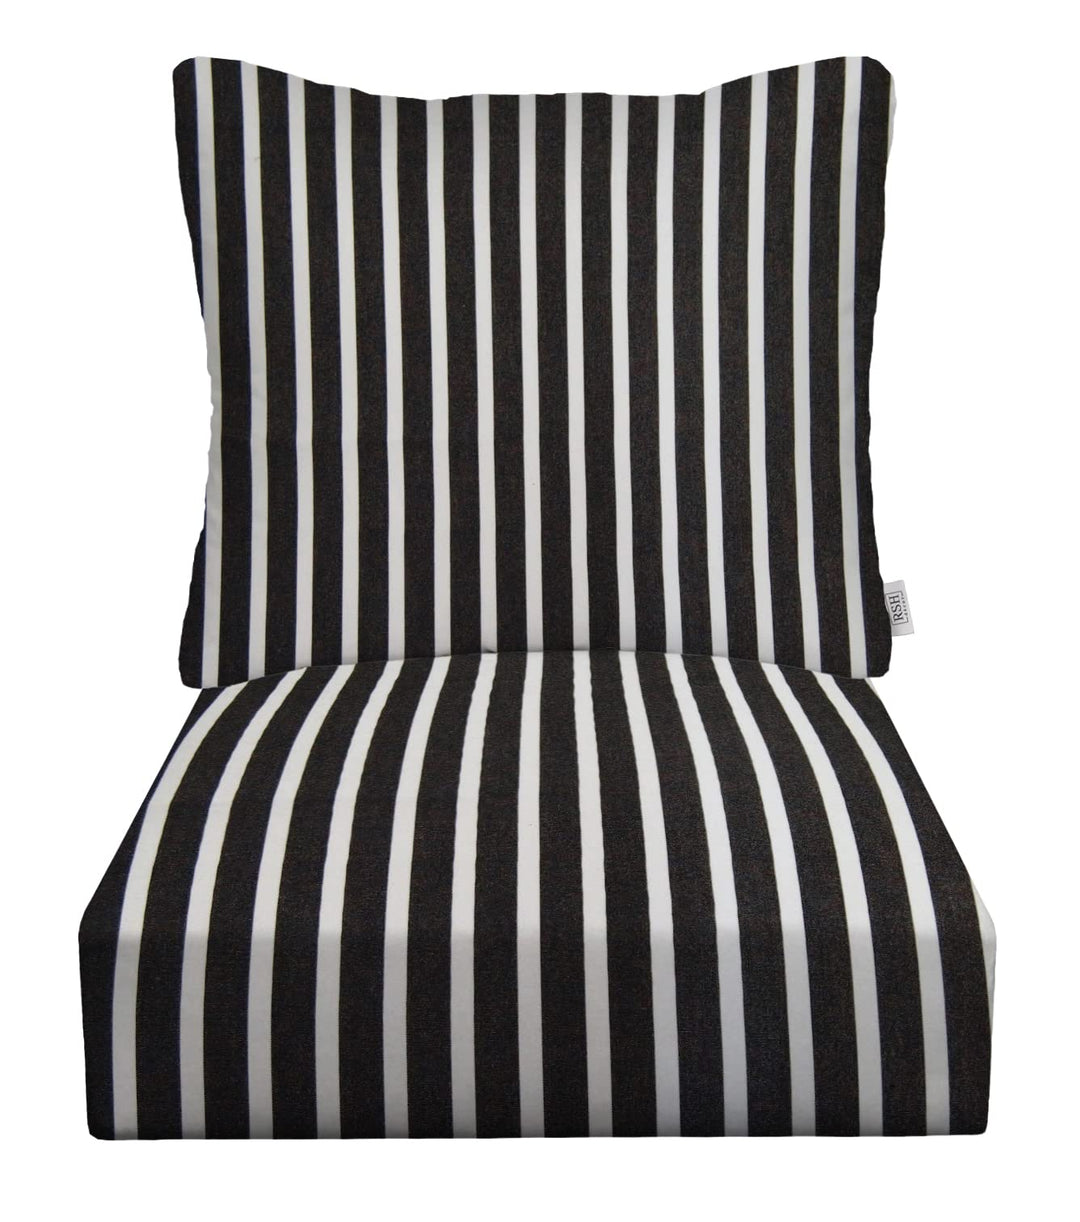 Deep Seating Pillow Back Chair Cushion Set, 24" x 27" x 5" Seat and 25" x 21" Back, Sunbrella Pattern - RSH Decor